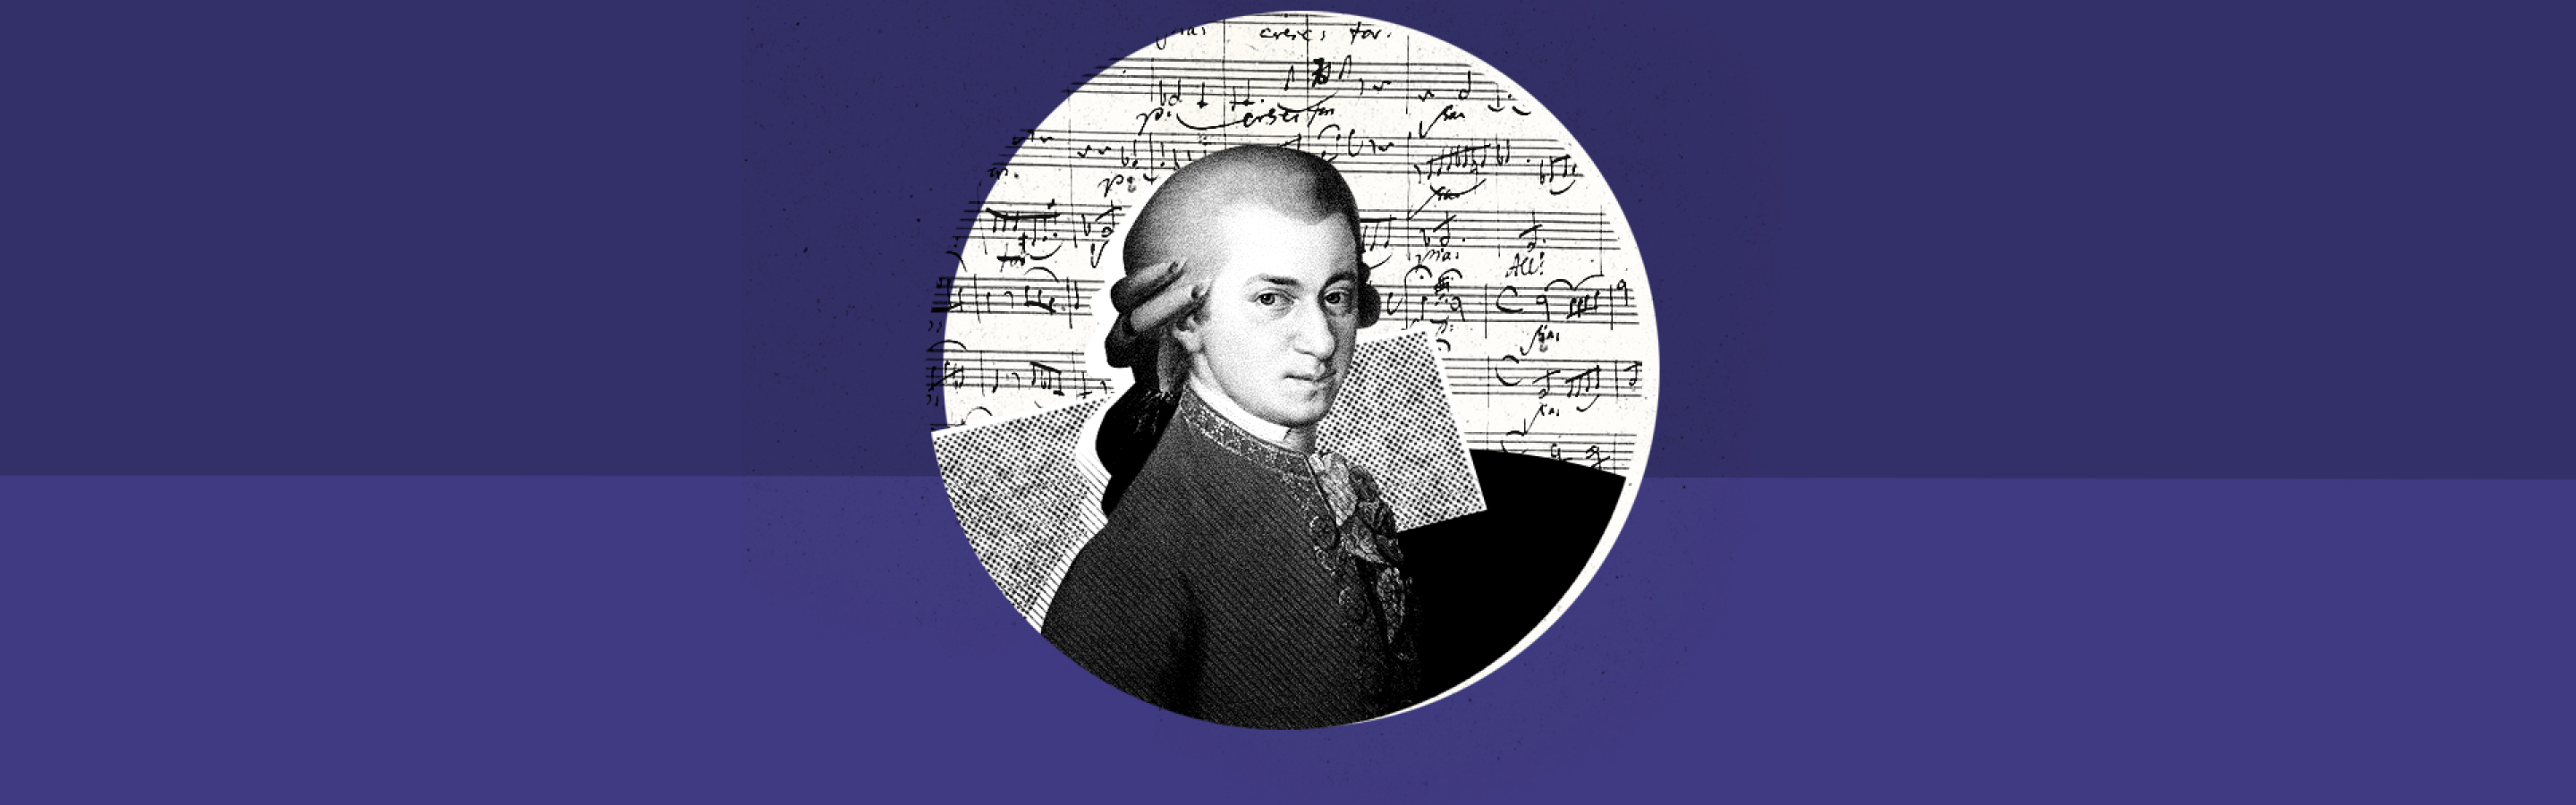 Illustration de Mozart